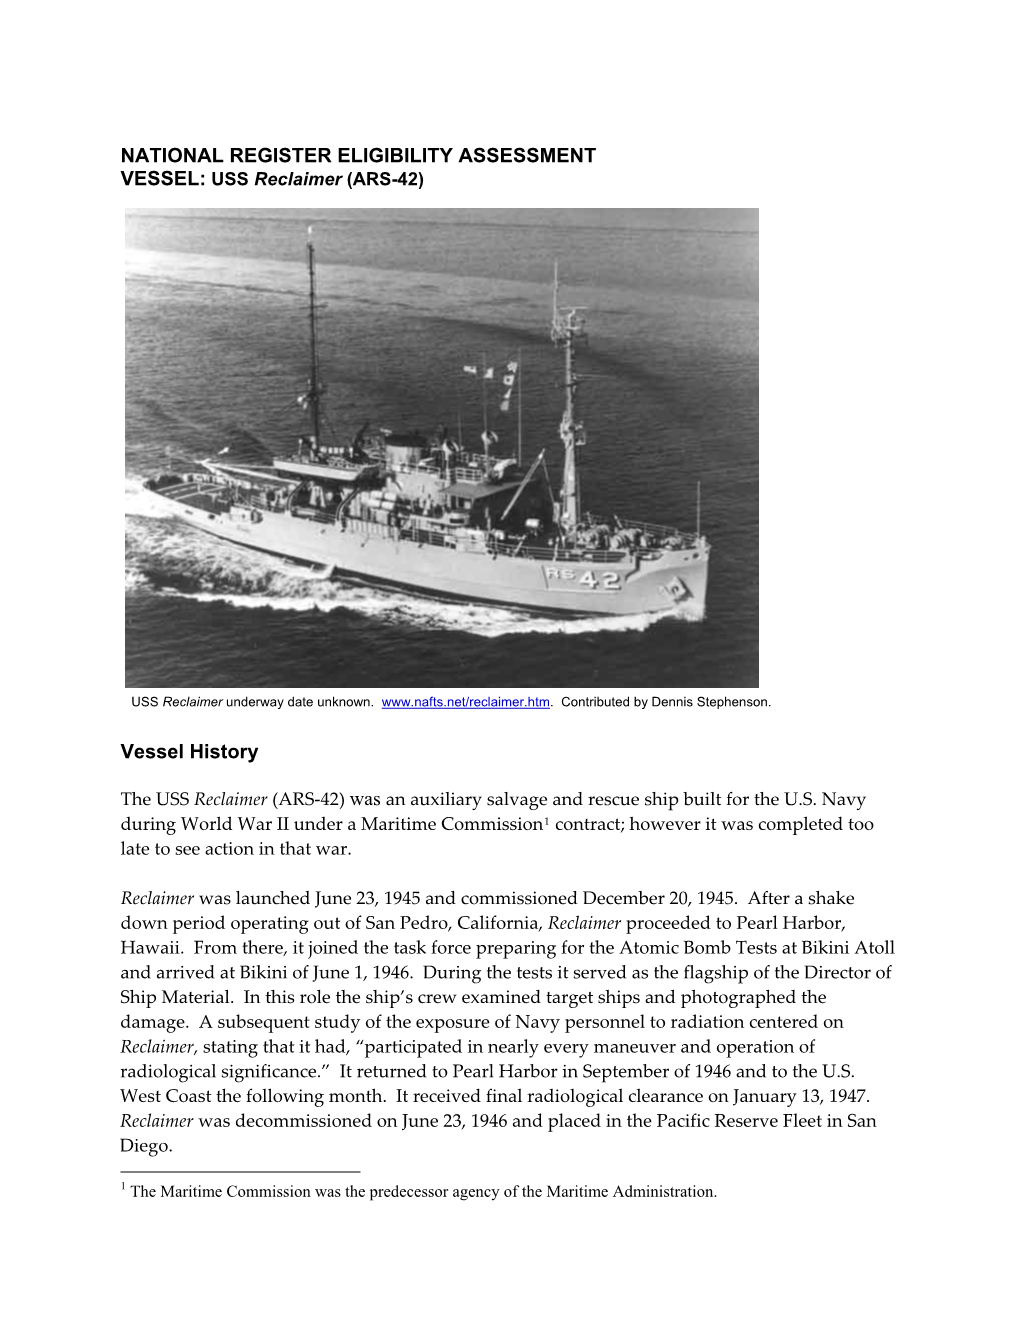 NATIONAL REGISTER ELIGIBILITY ASSESSMENT Vessel History